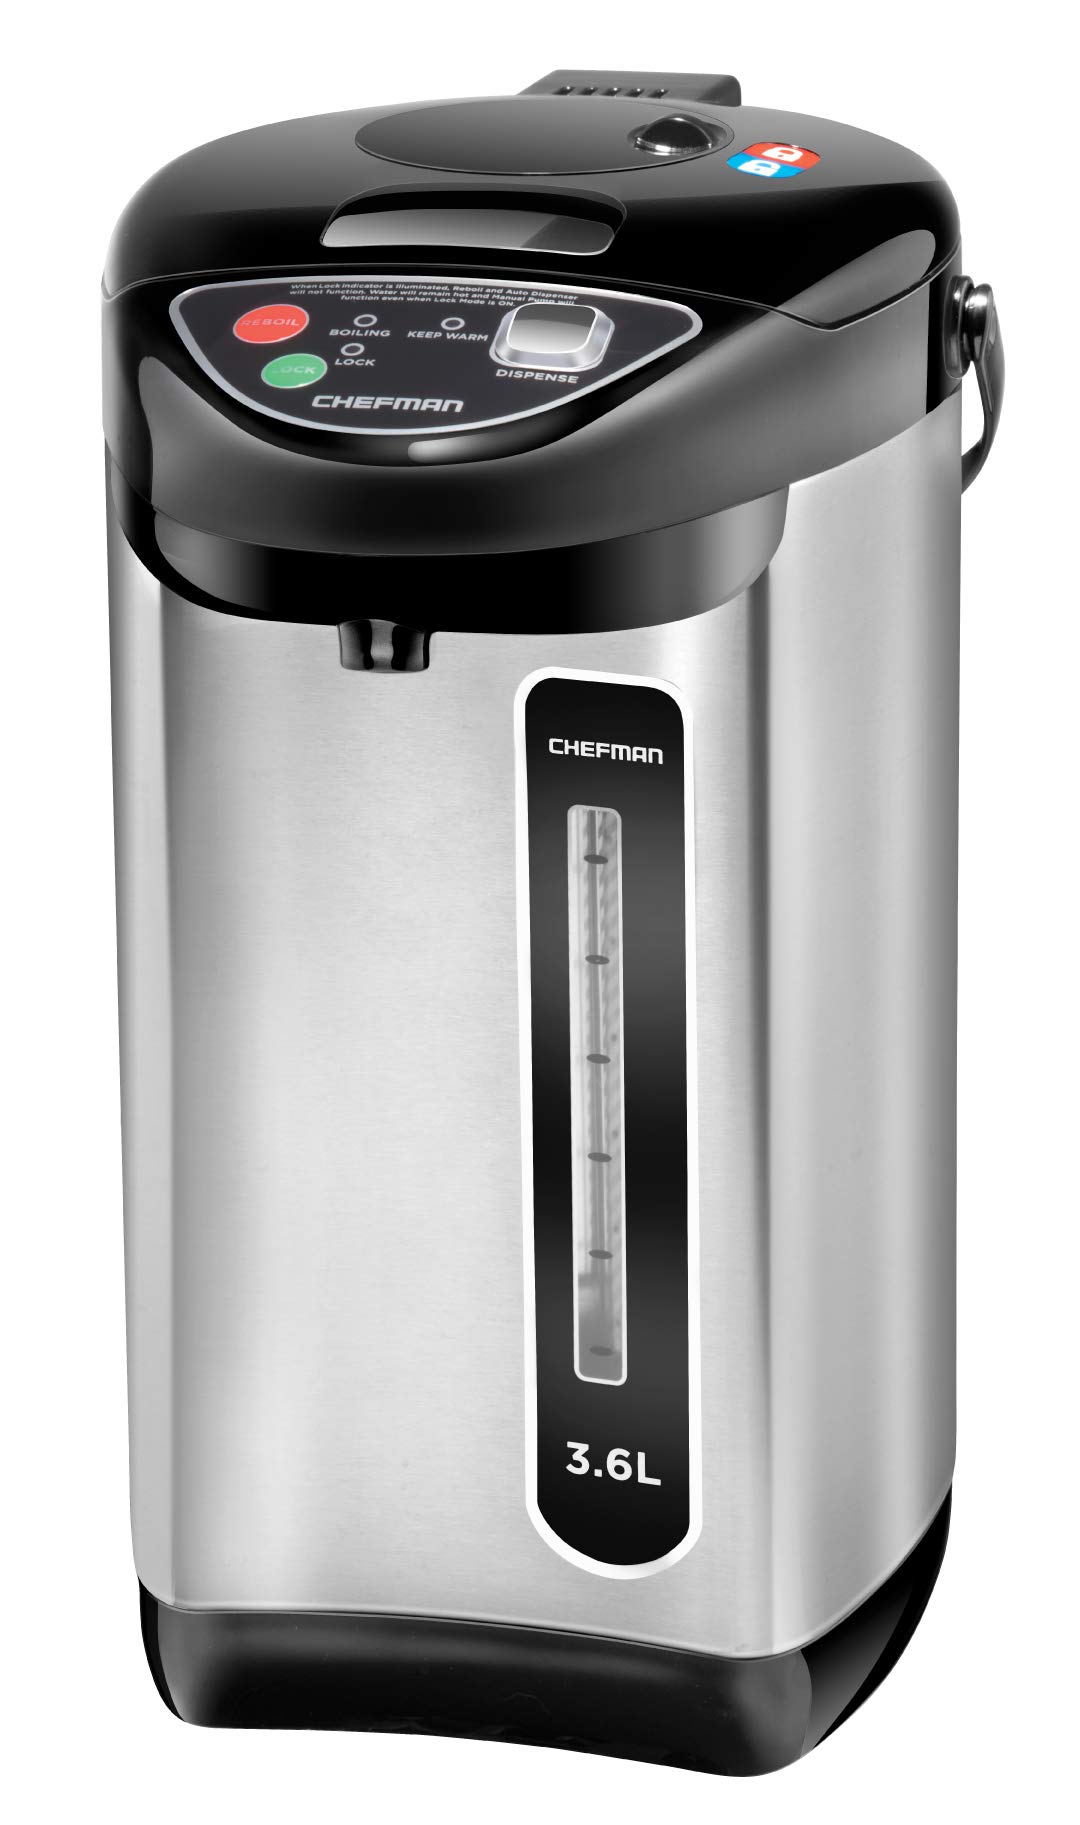 Chefman 电热水壶带自动和手动分配按钮、安全锁、咖啡和茶即时加热、自动关闭/煮干保护